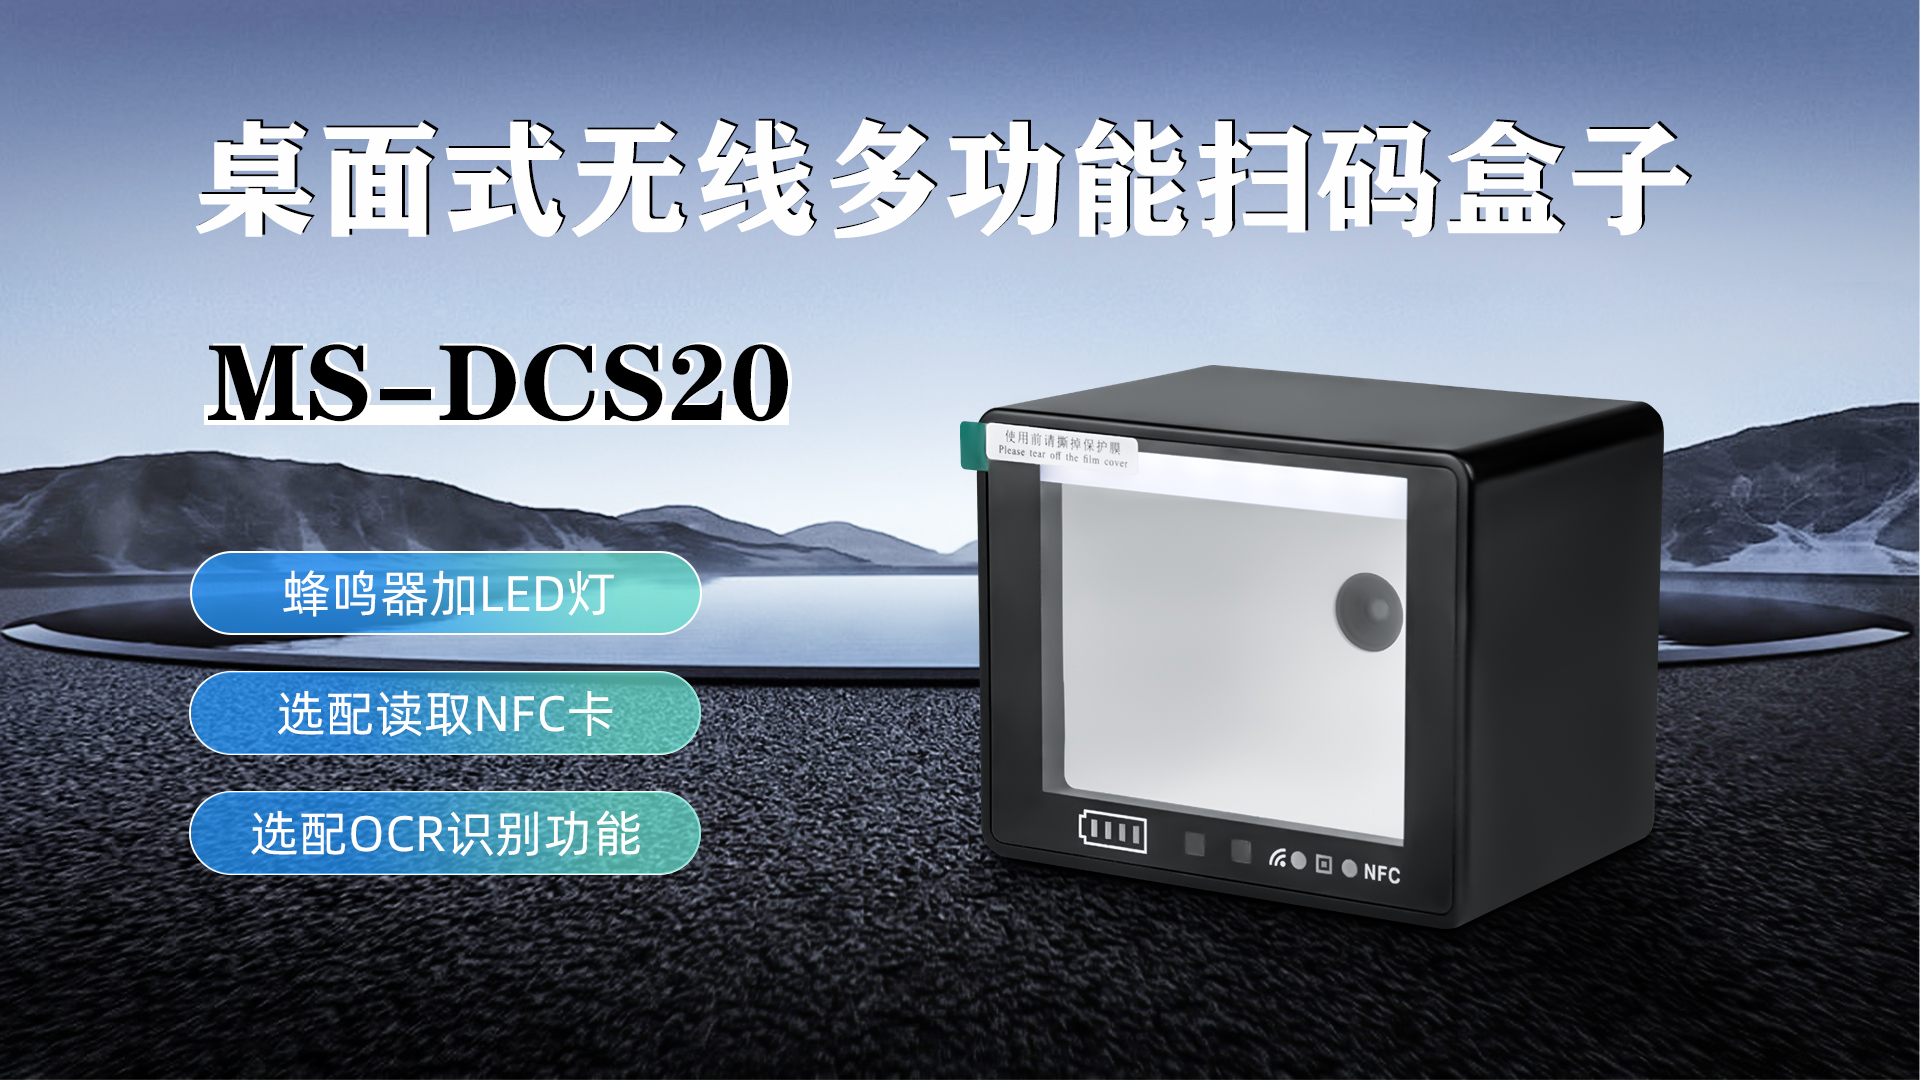 MS-DCS20具有蜂鸣器加LED灯功能，可选配NFC卡识别加OCR识别功能